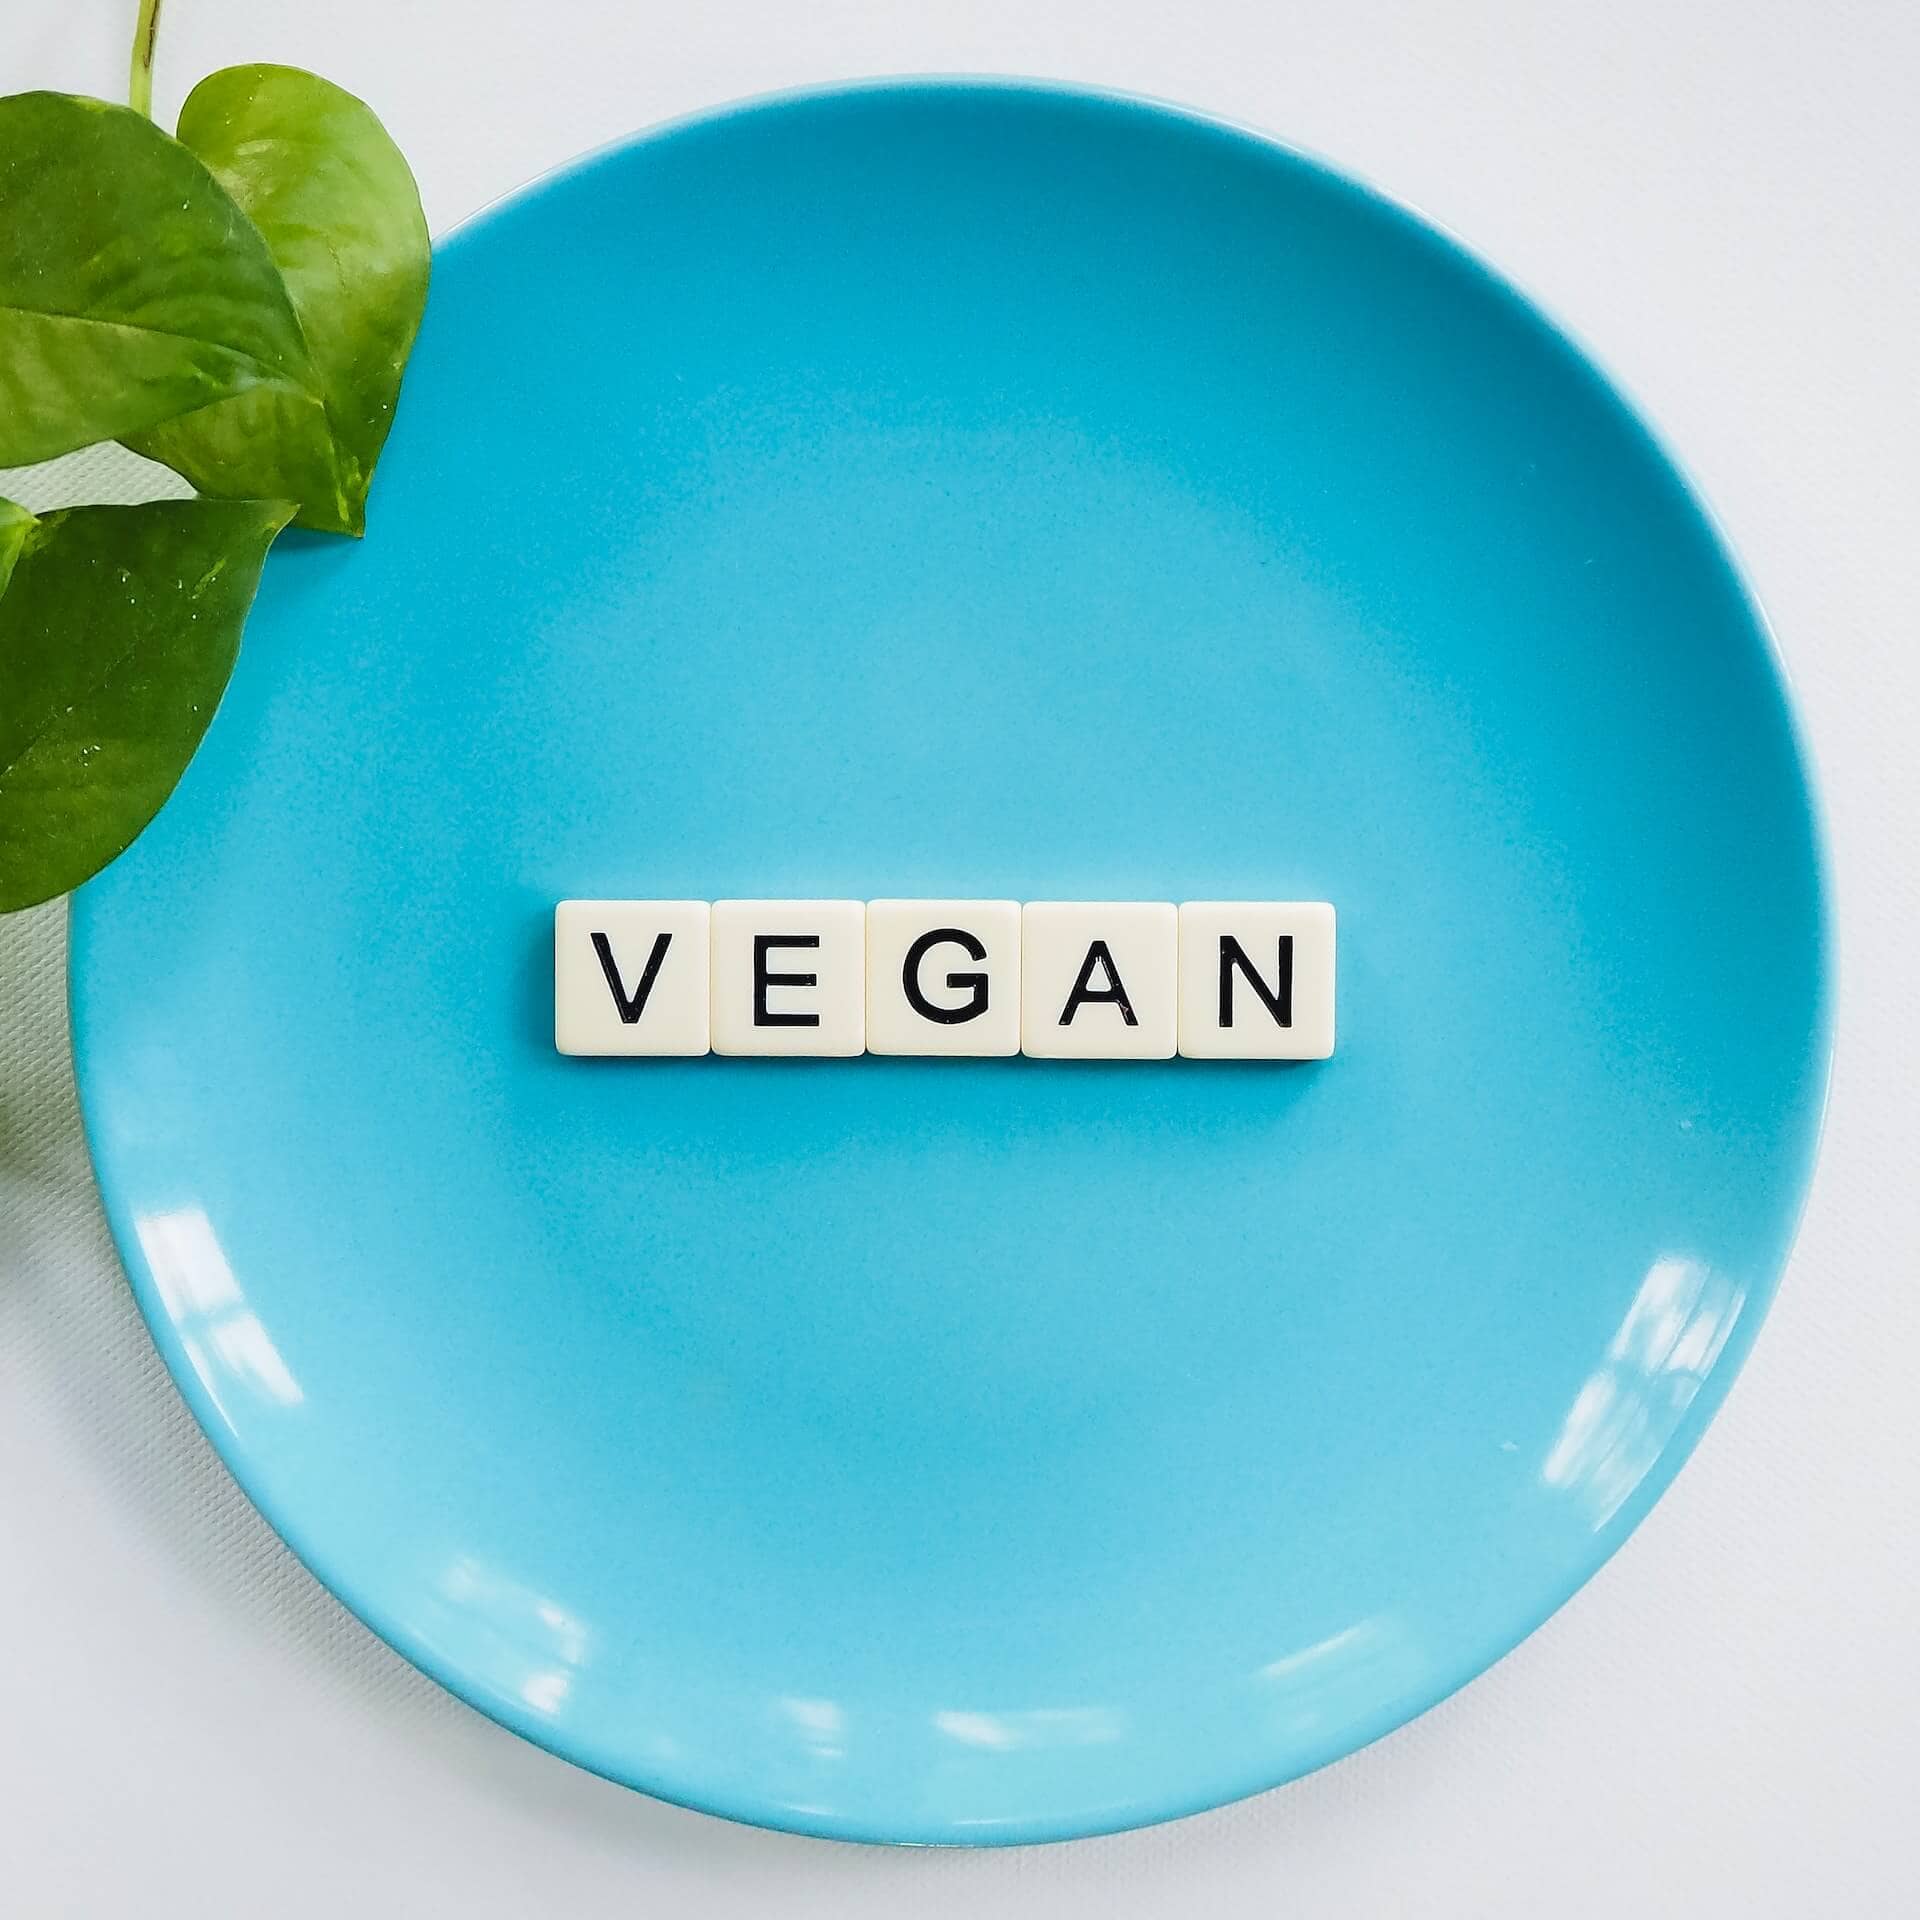 Was essen Veganer?